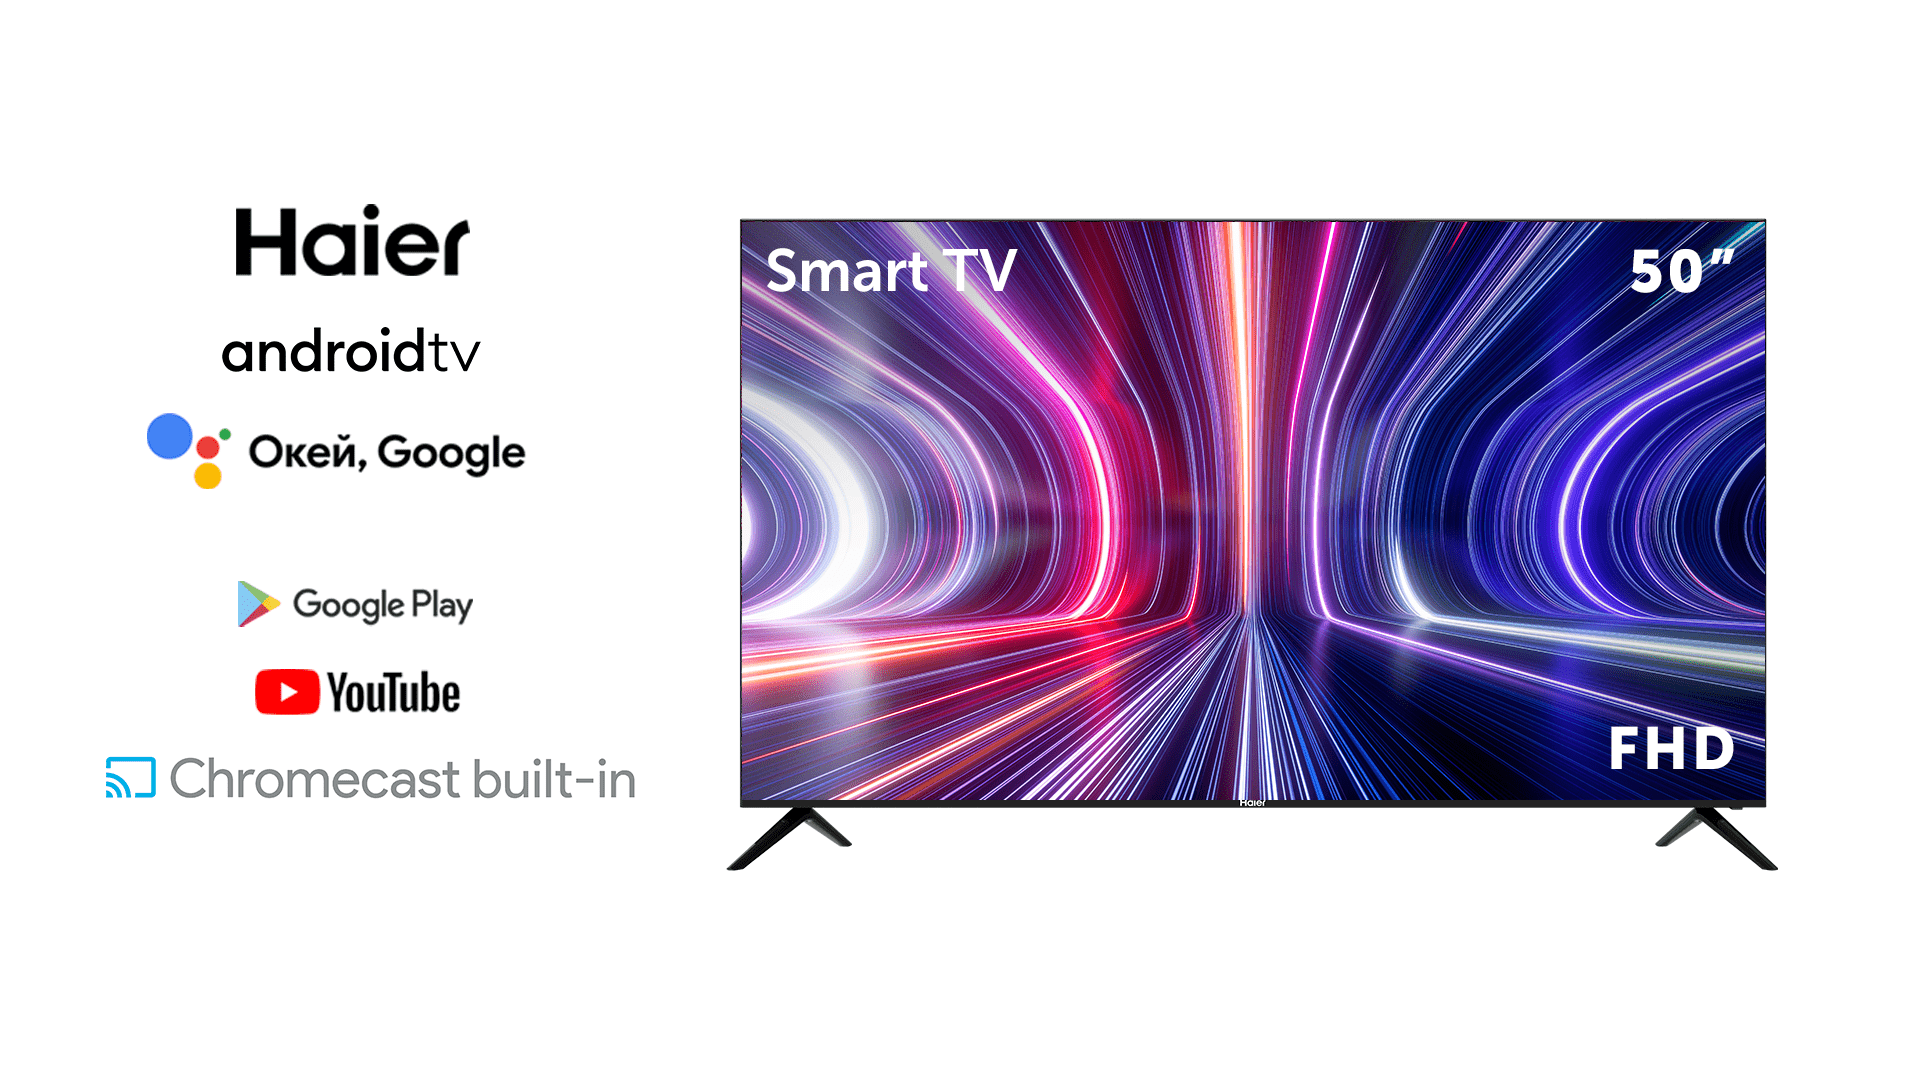 Телевизор Haier 50 Smart TV K6